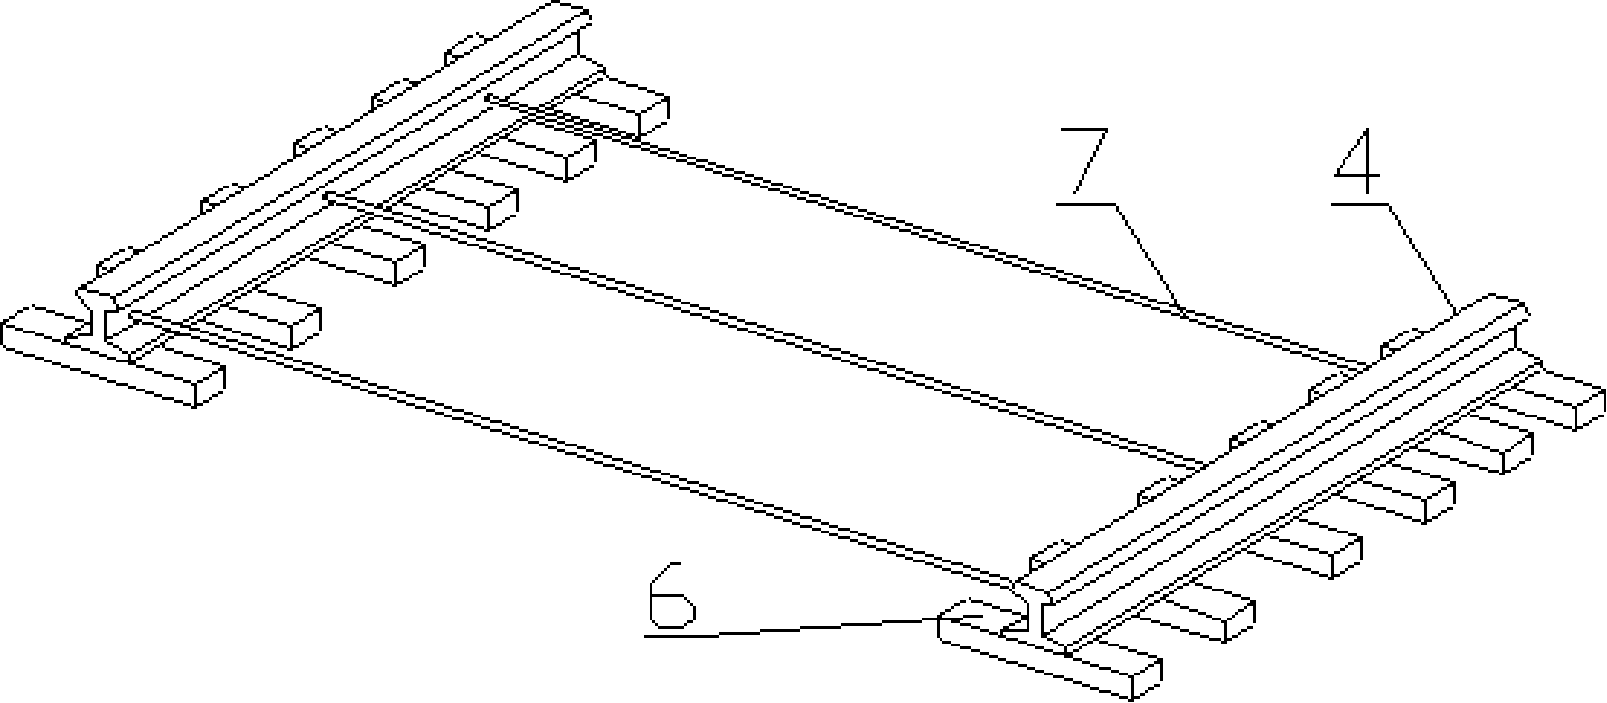 Moving tower crane bridge surface running construction method and apparatus